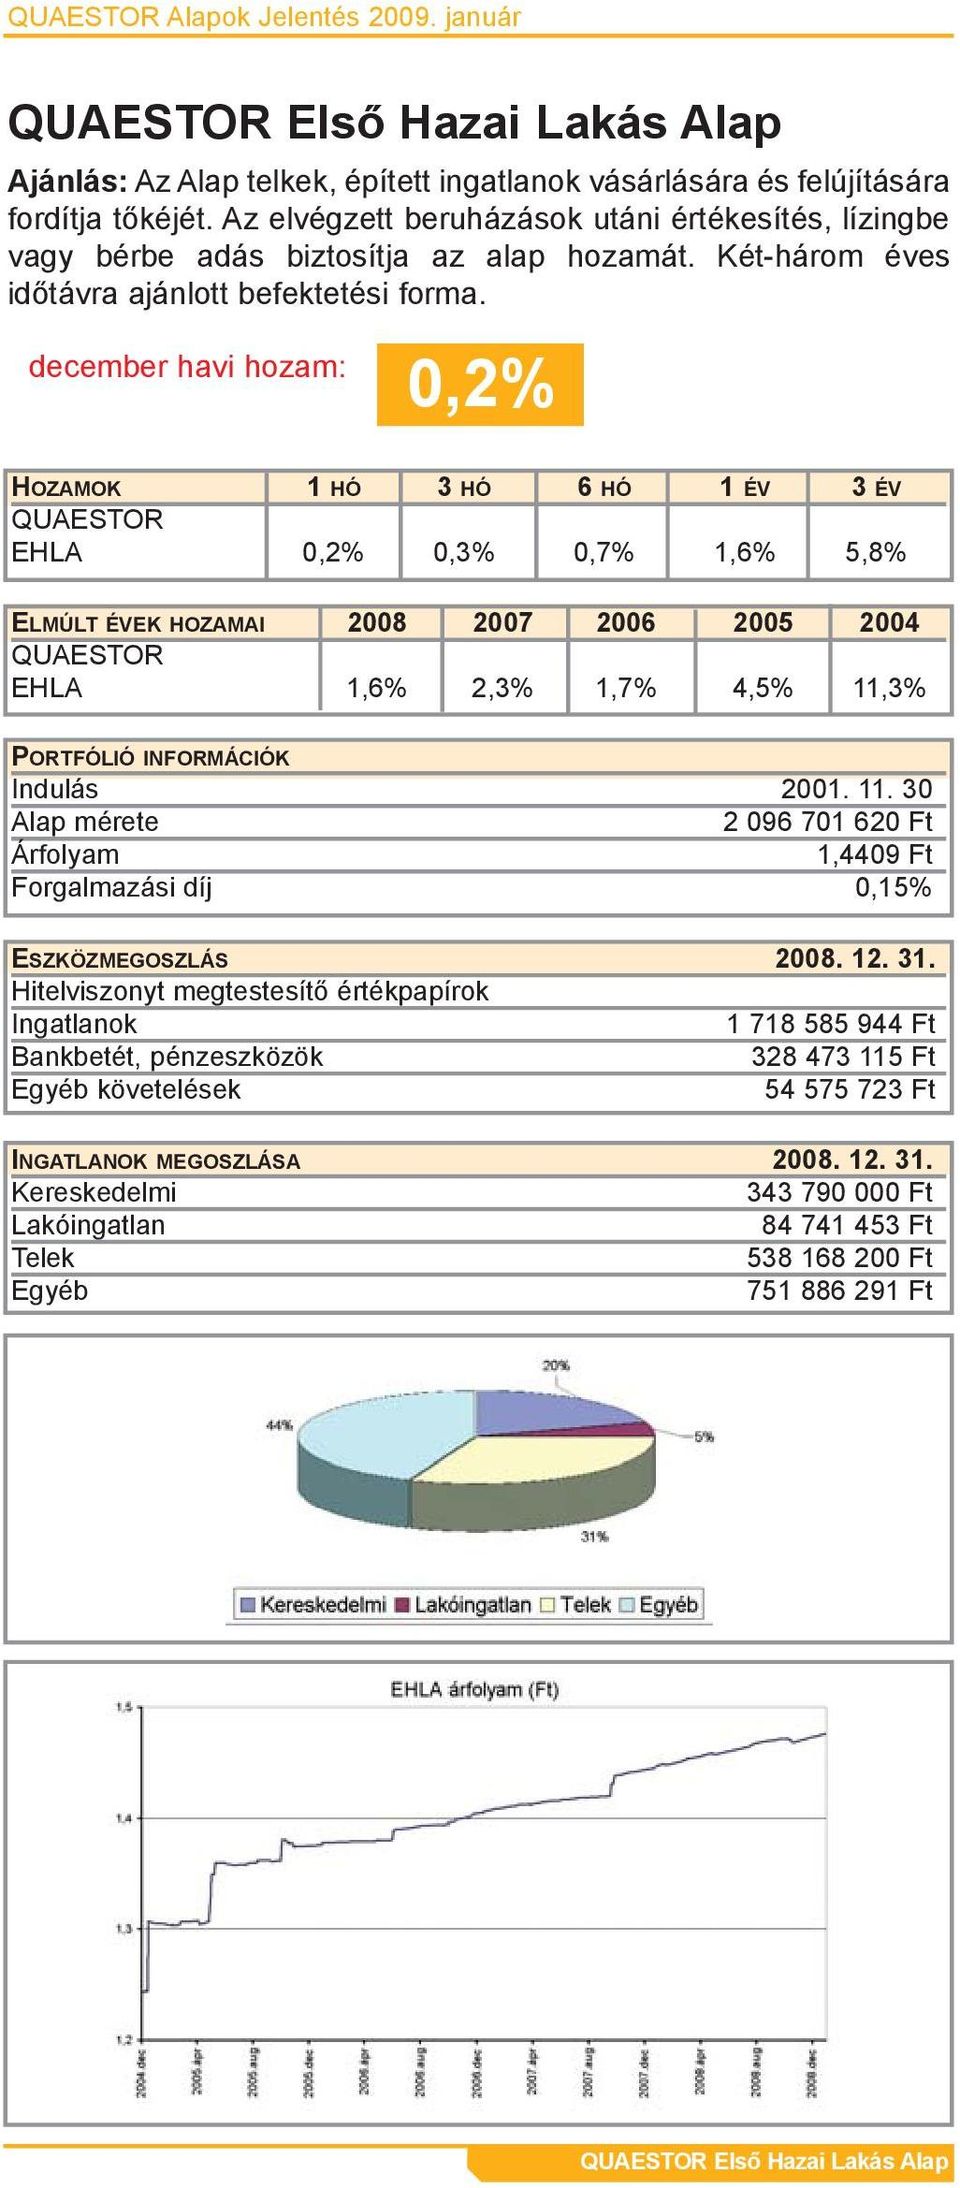 december havi hozam: 0,2% EHLA 0,2% 0,3% 0,7% 1,6% 5,8% EHLA 1,6% 2,3% 1,7% 4,5% 11,